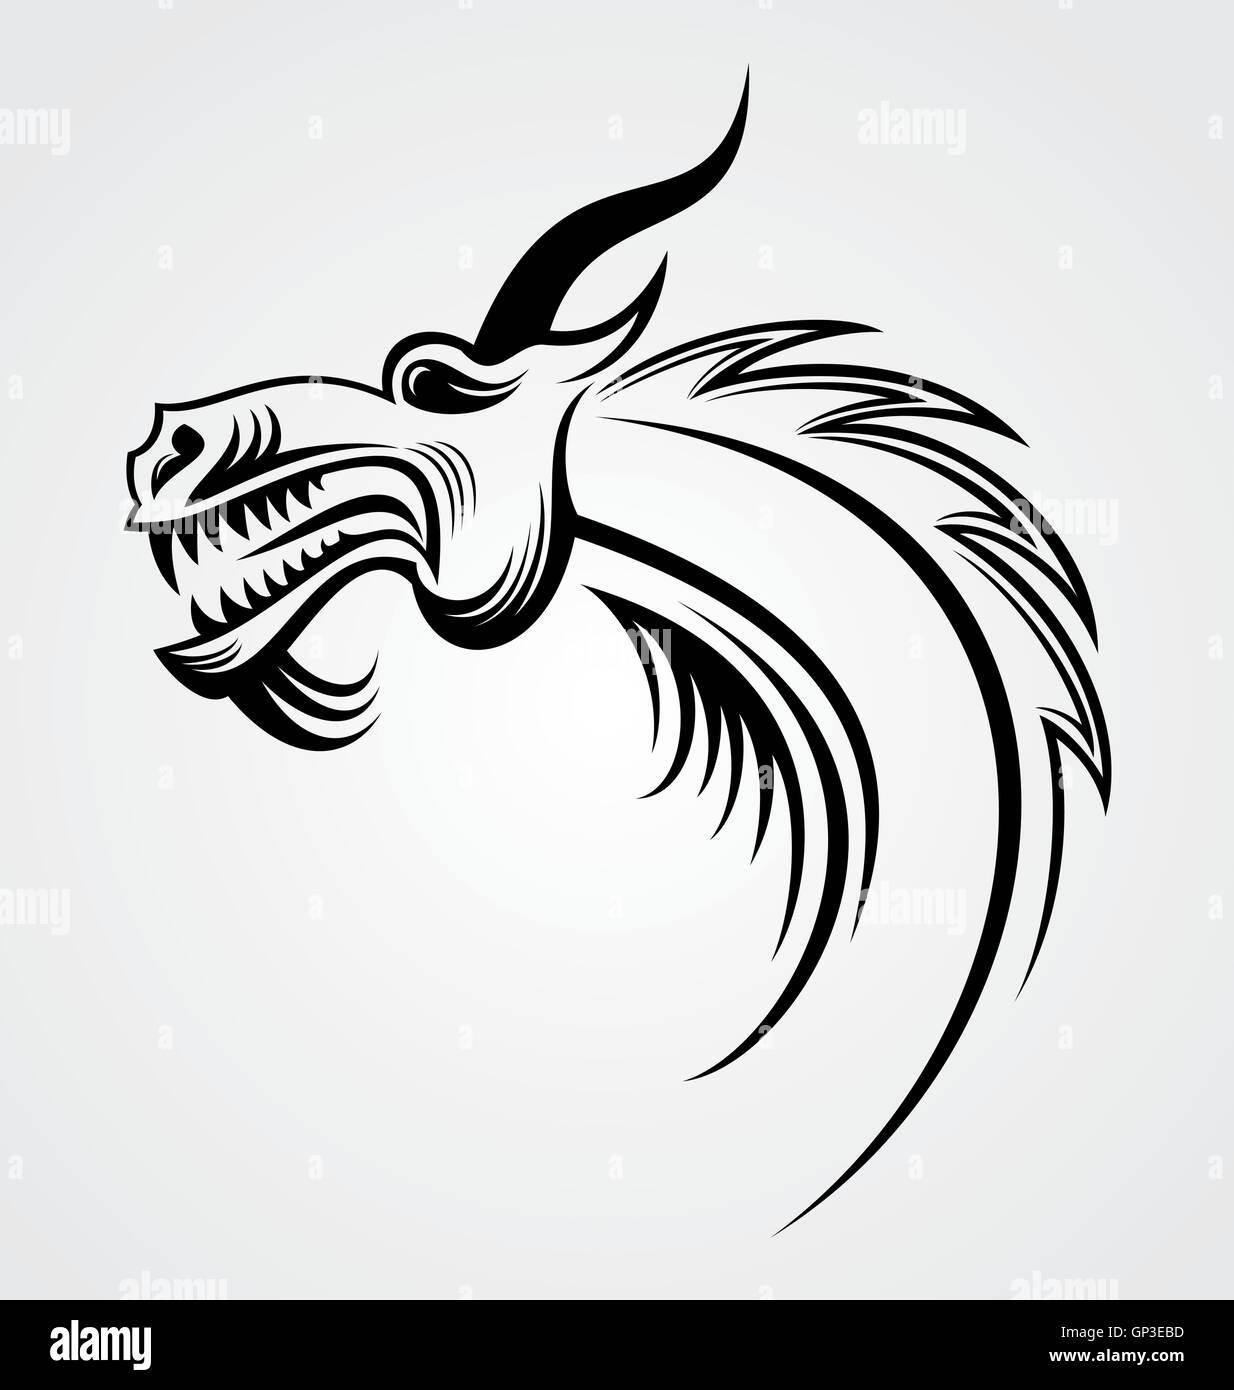 Dragon Head Tattoo Design Stock Vector